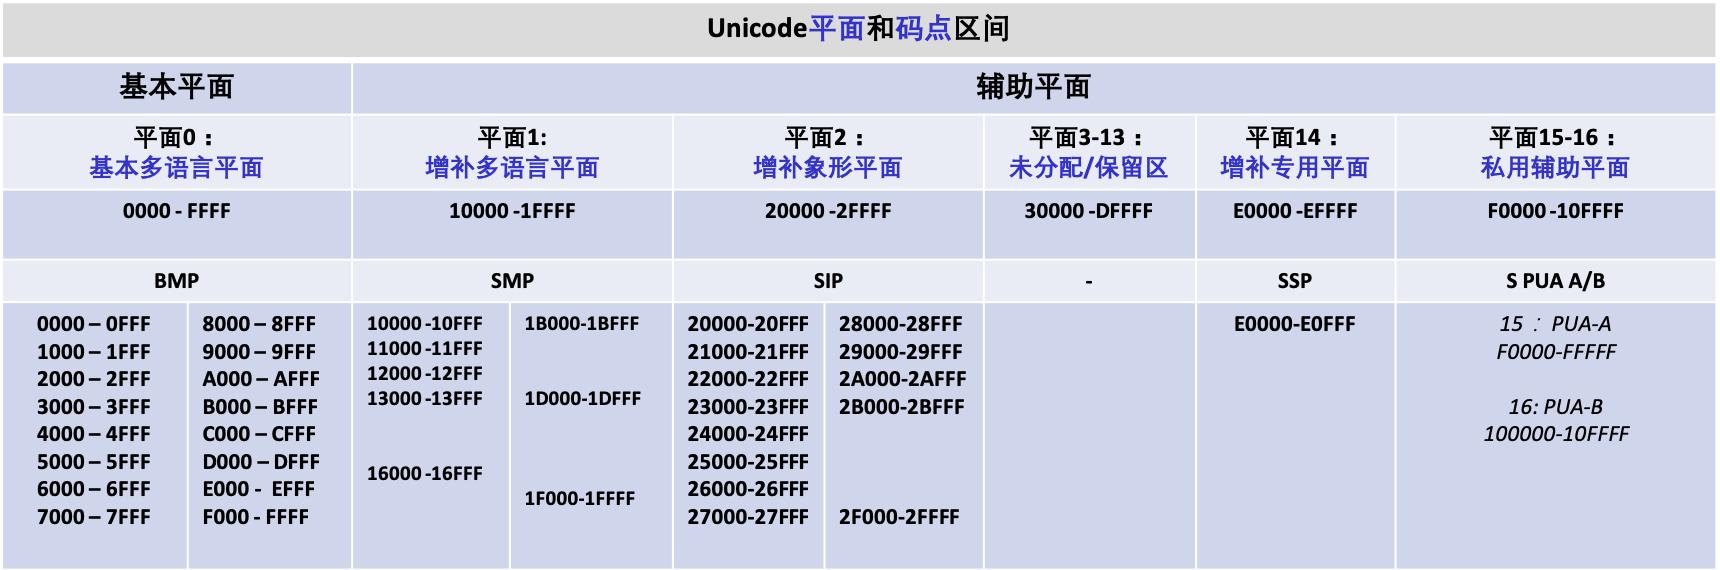 Unicode 及编码方式概述